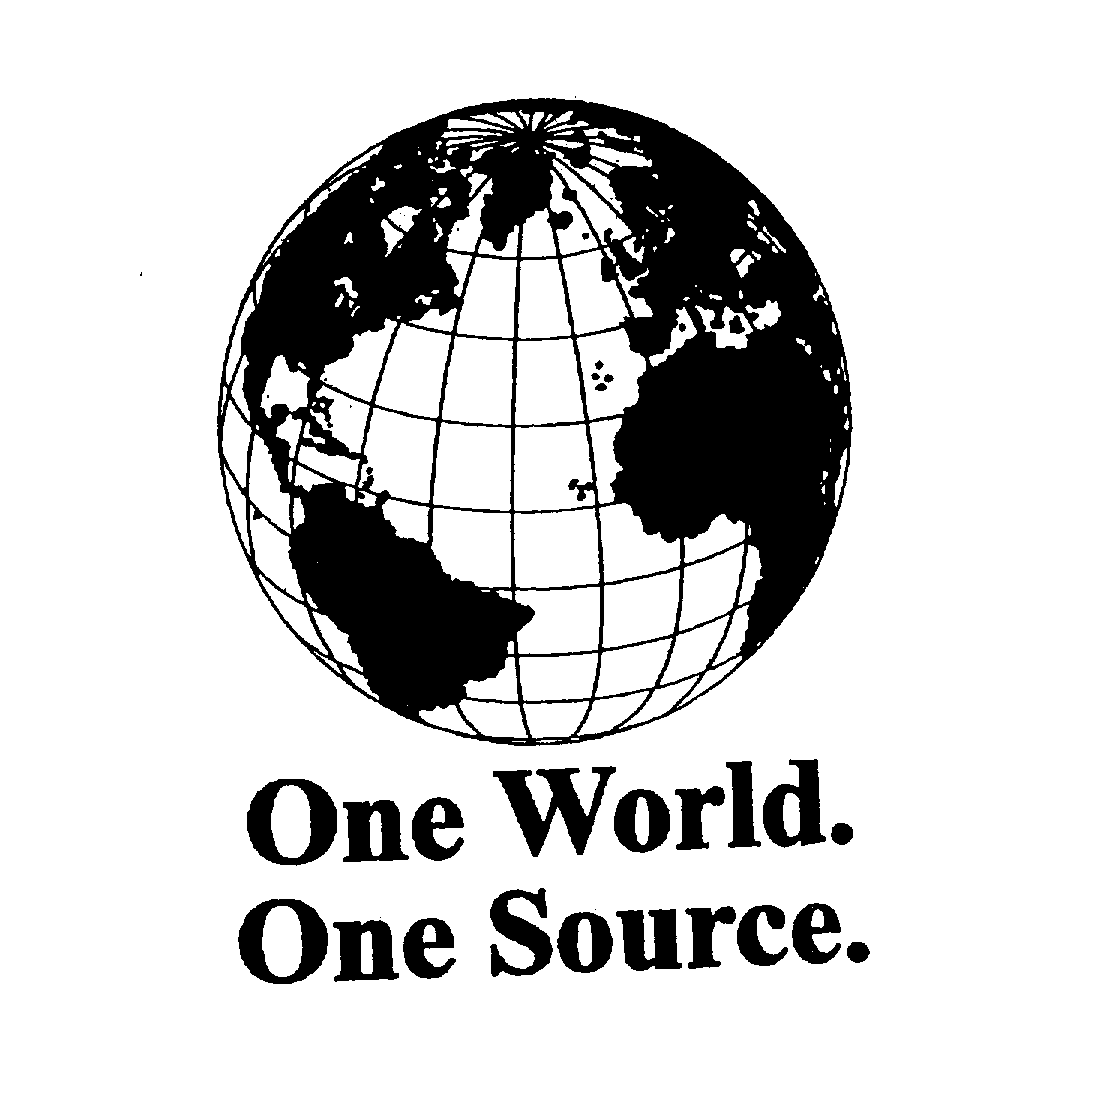 ONE WORLD. ONE SOURCE.